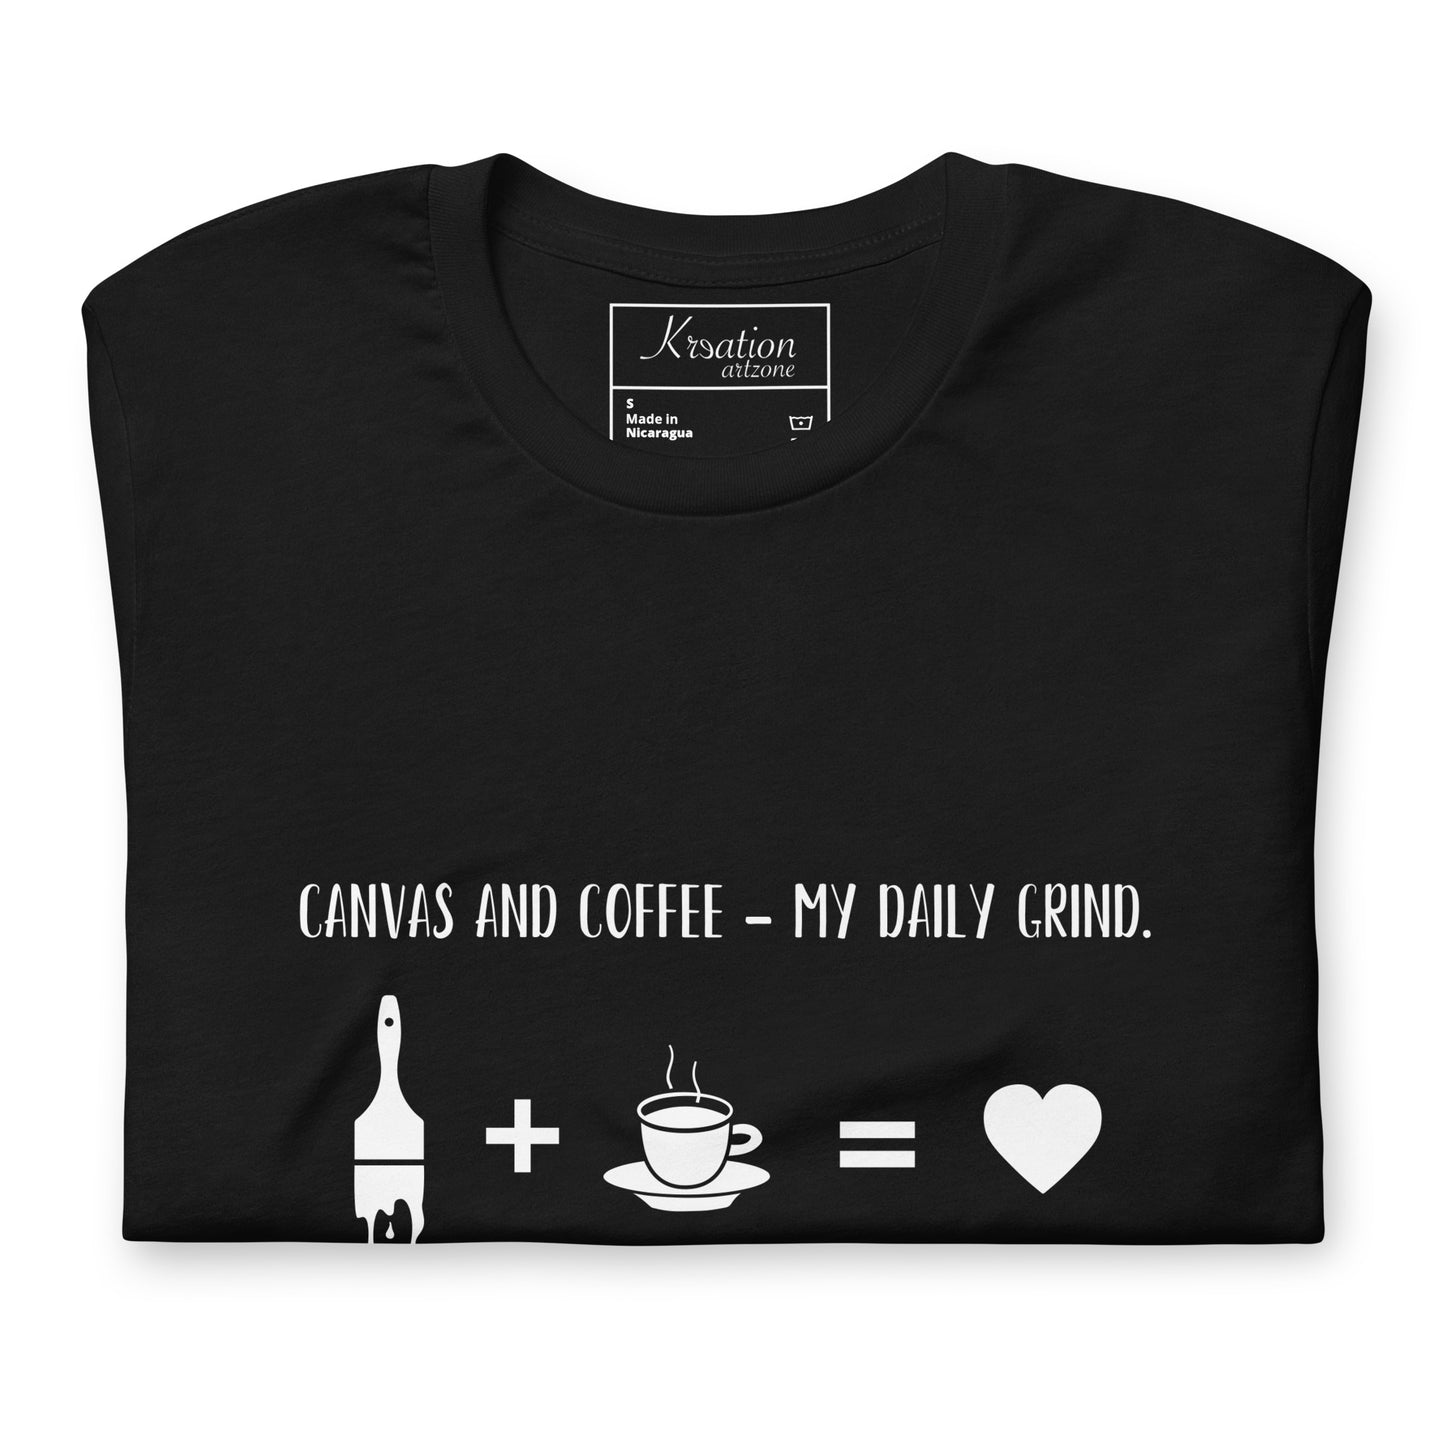 "Lienzo y café: mi rutina diaria". - Camiseta unisex